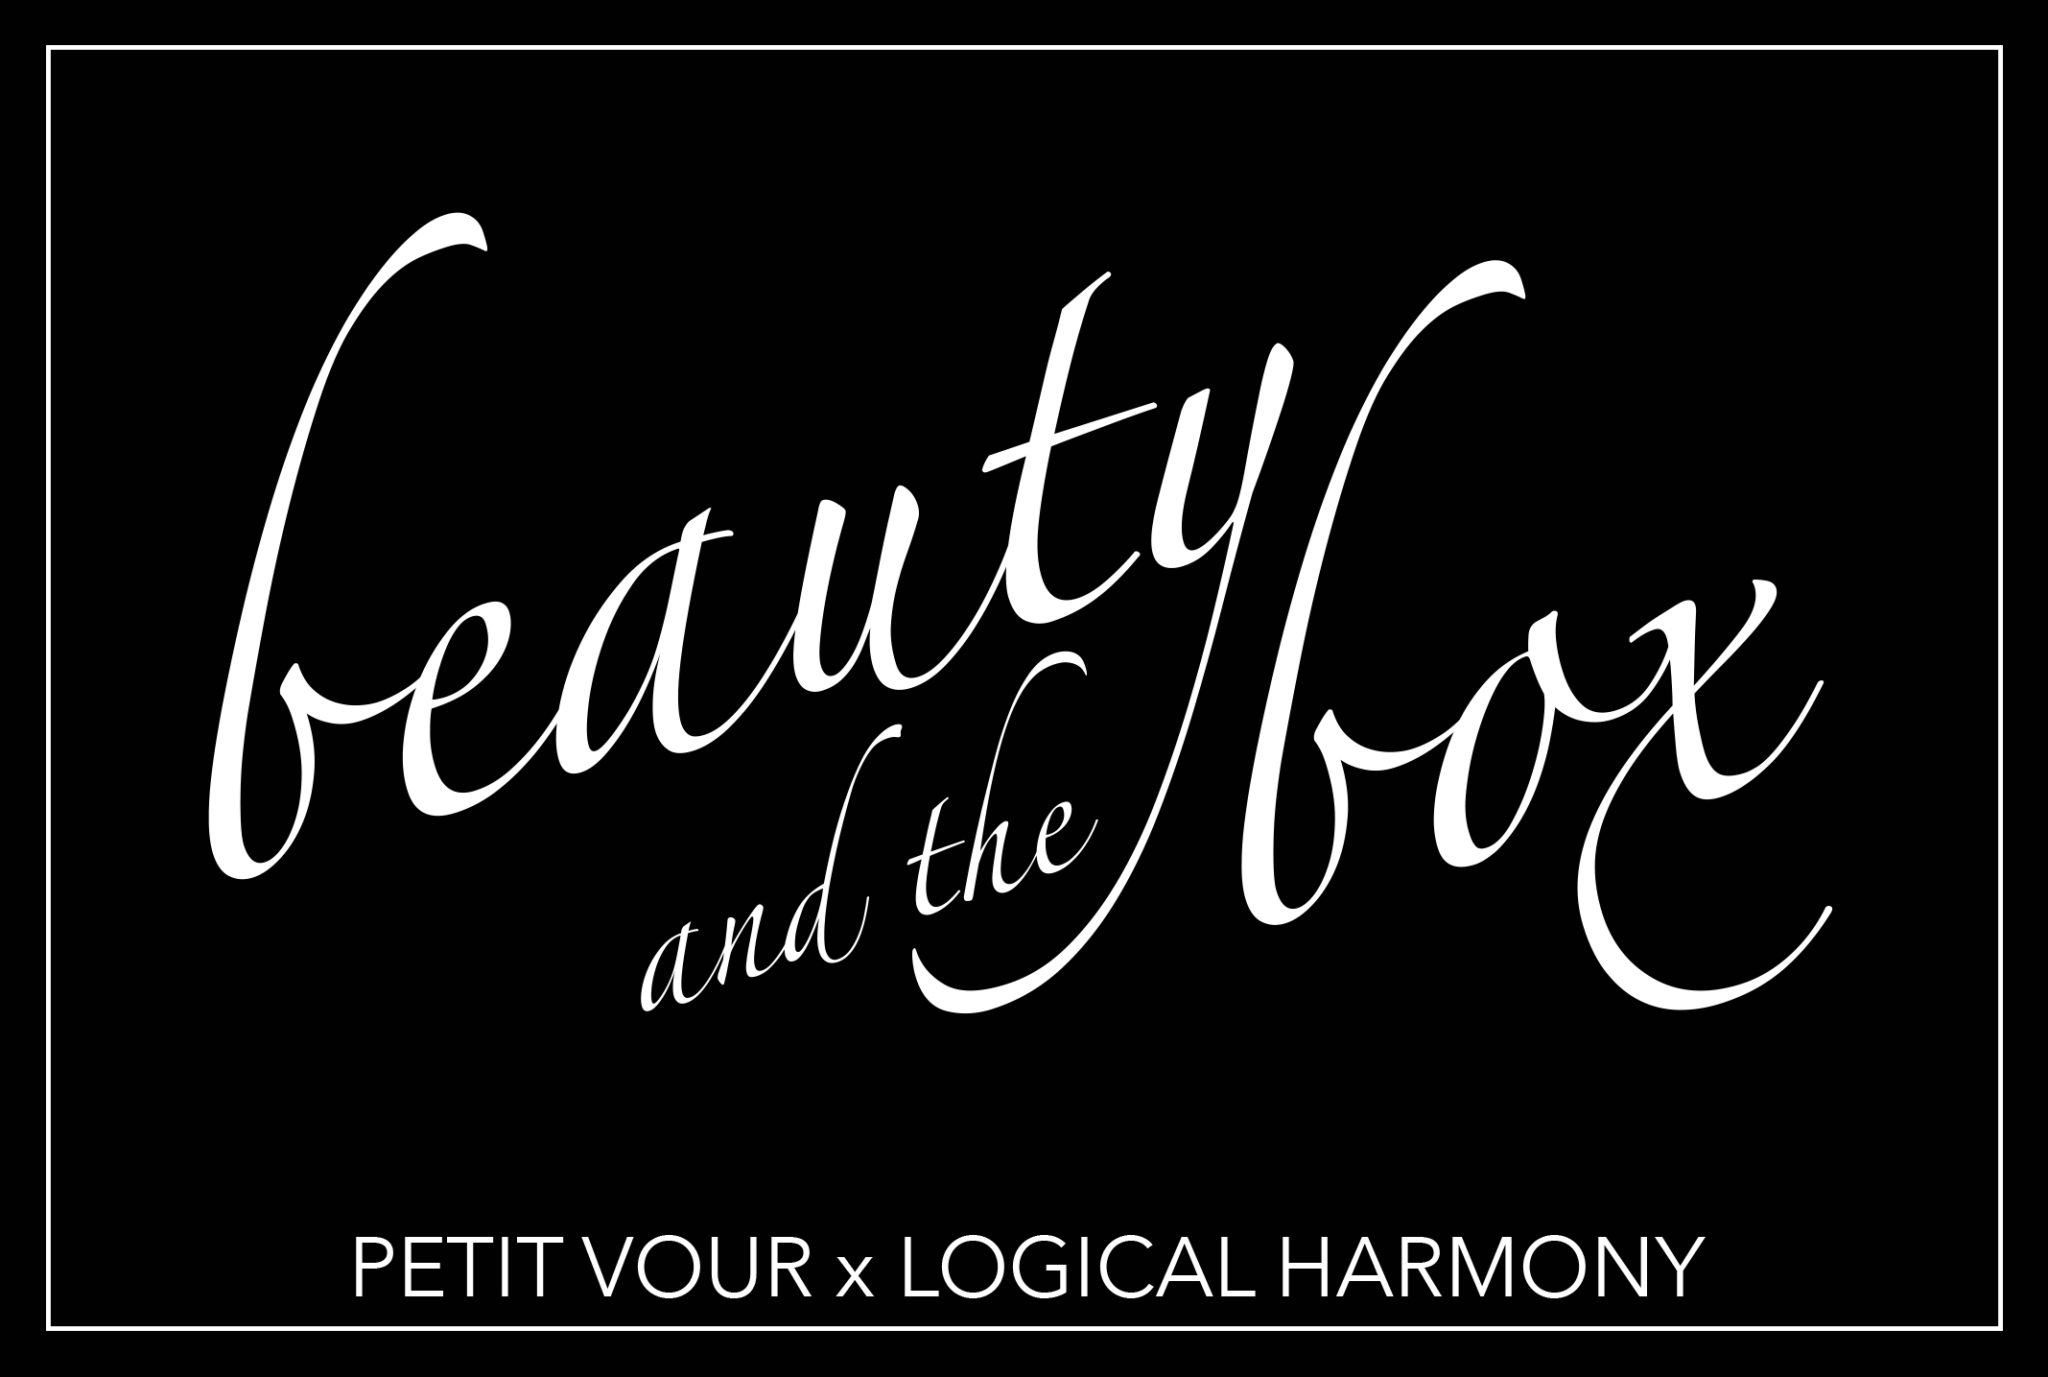 Petit Vour September Beauty Box Sneak Peek!